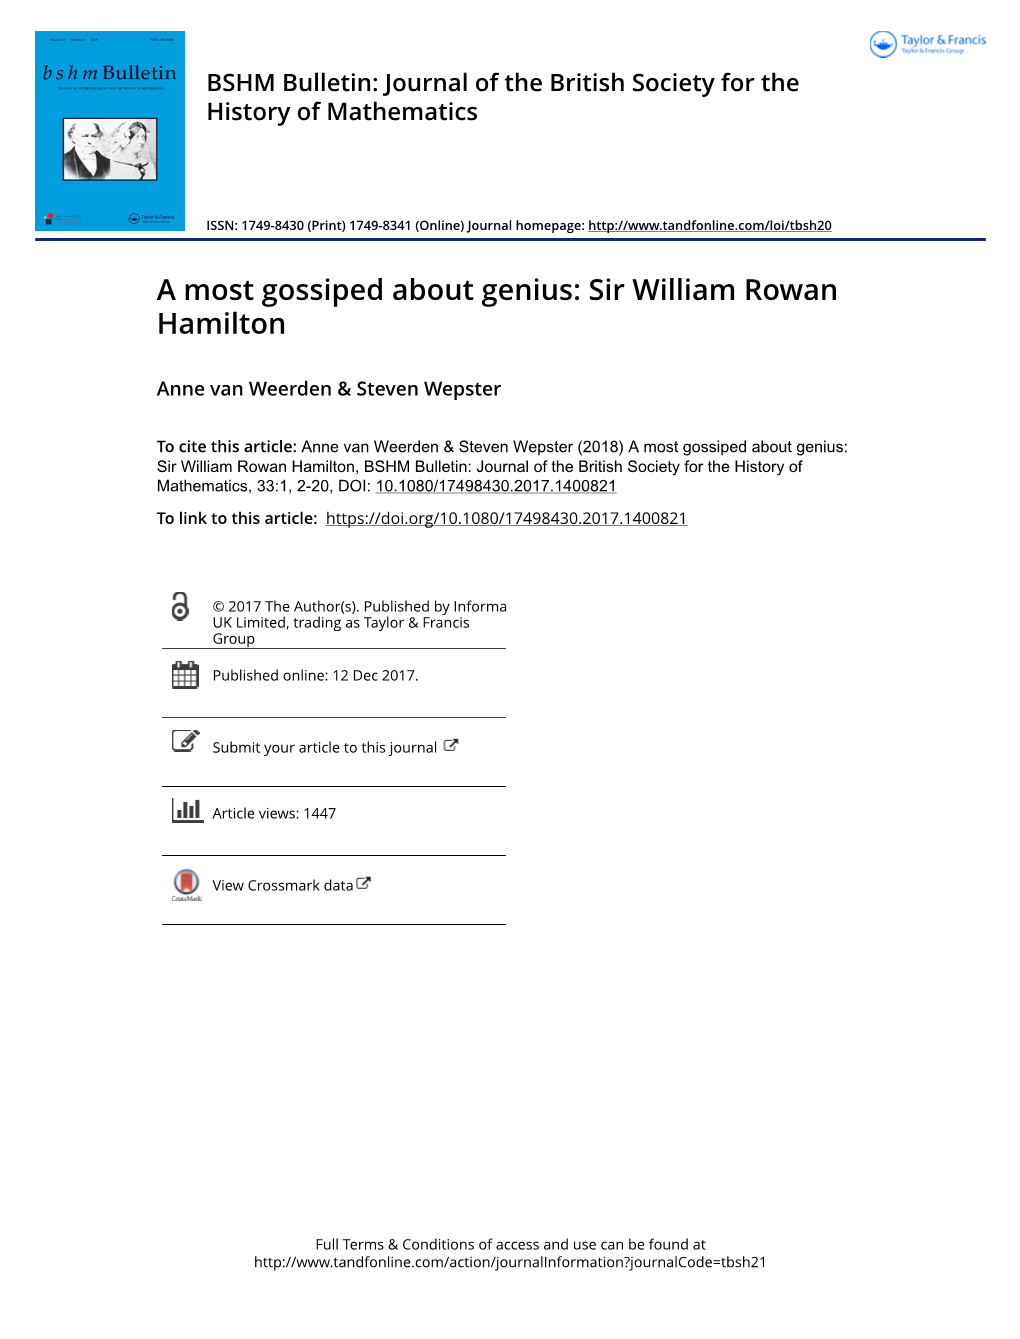 A Most Gossiped About Genius: Sir William Rowan Hamilton